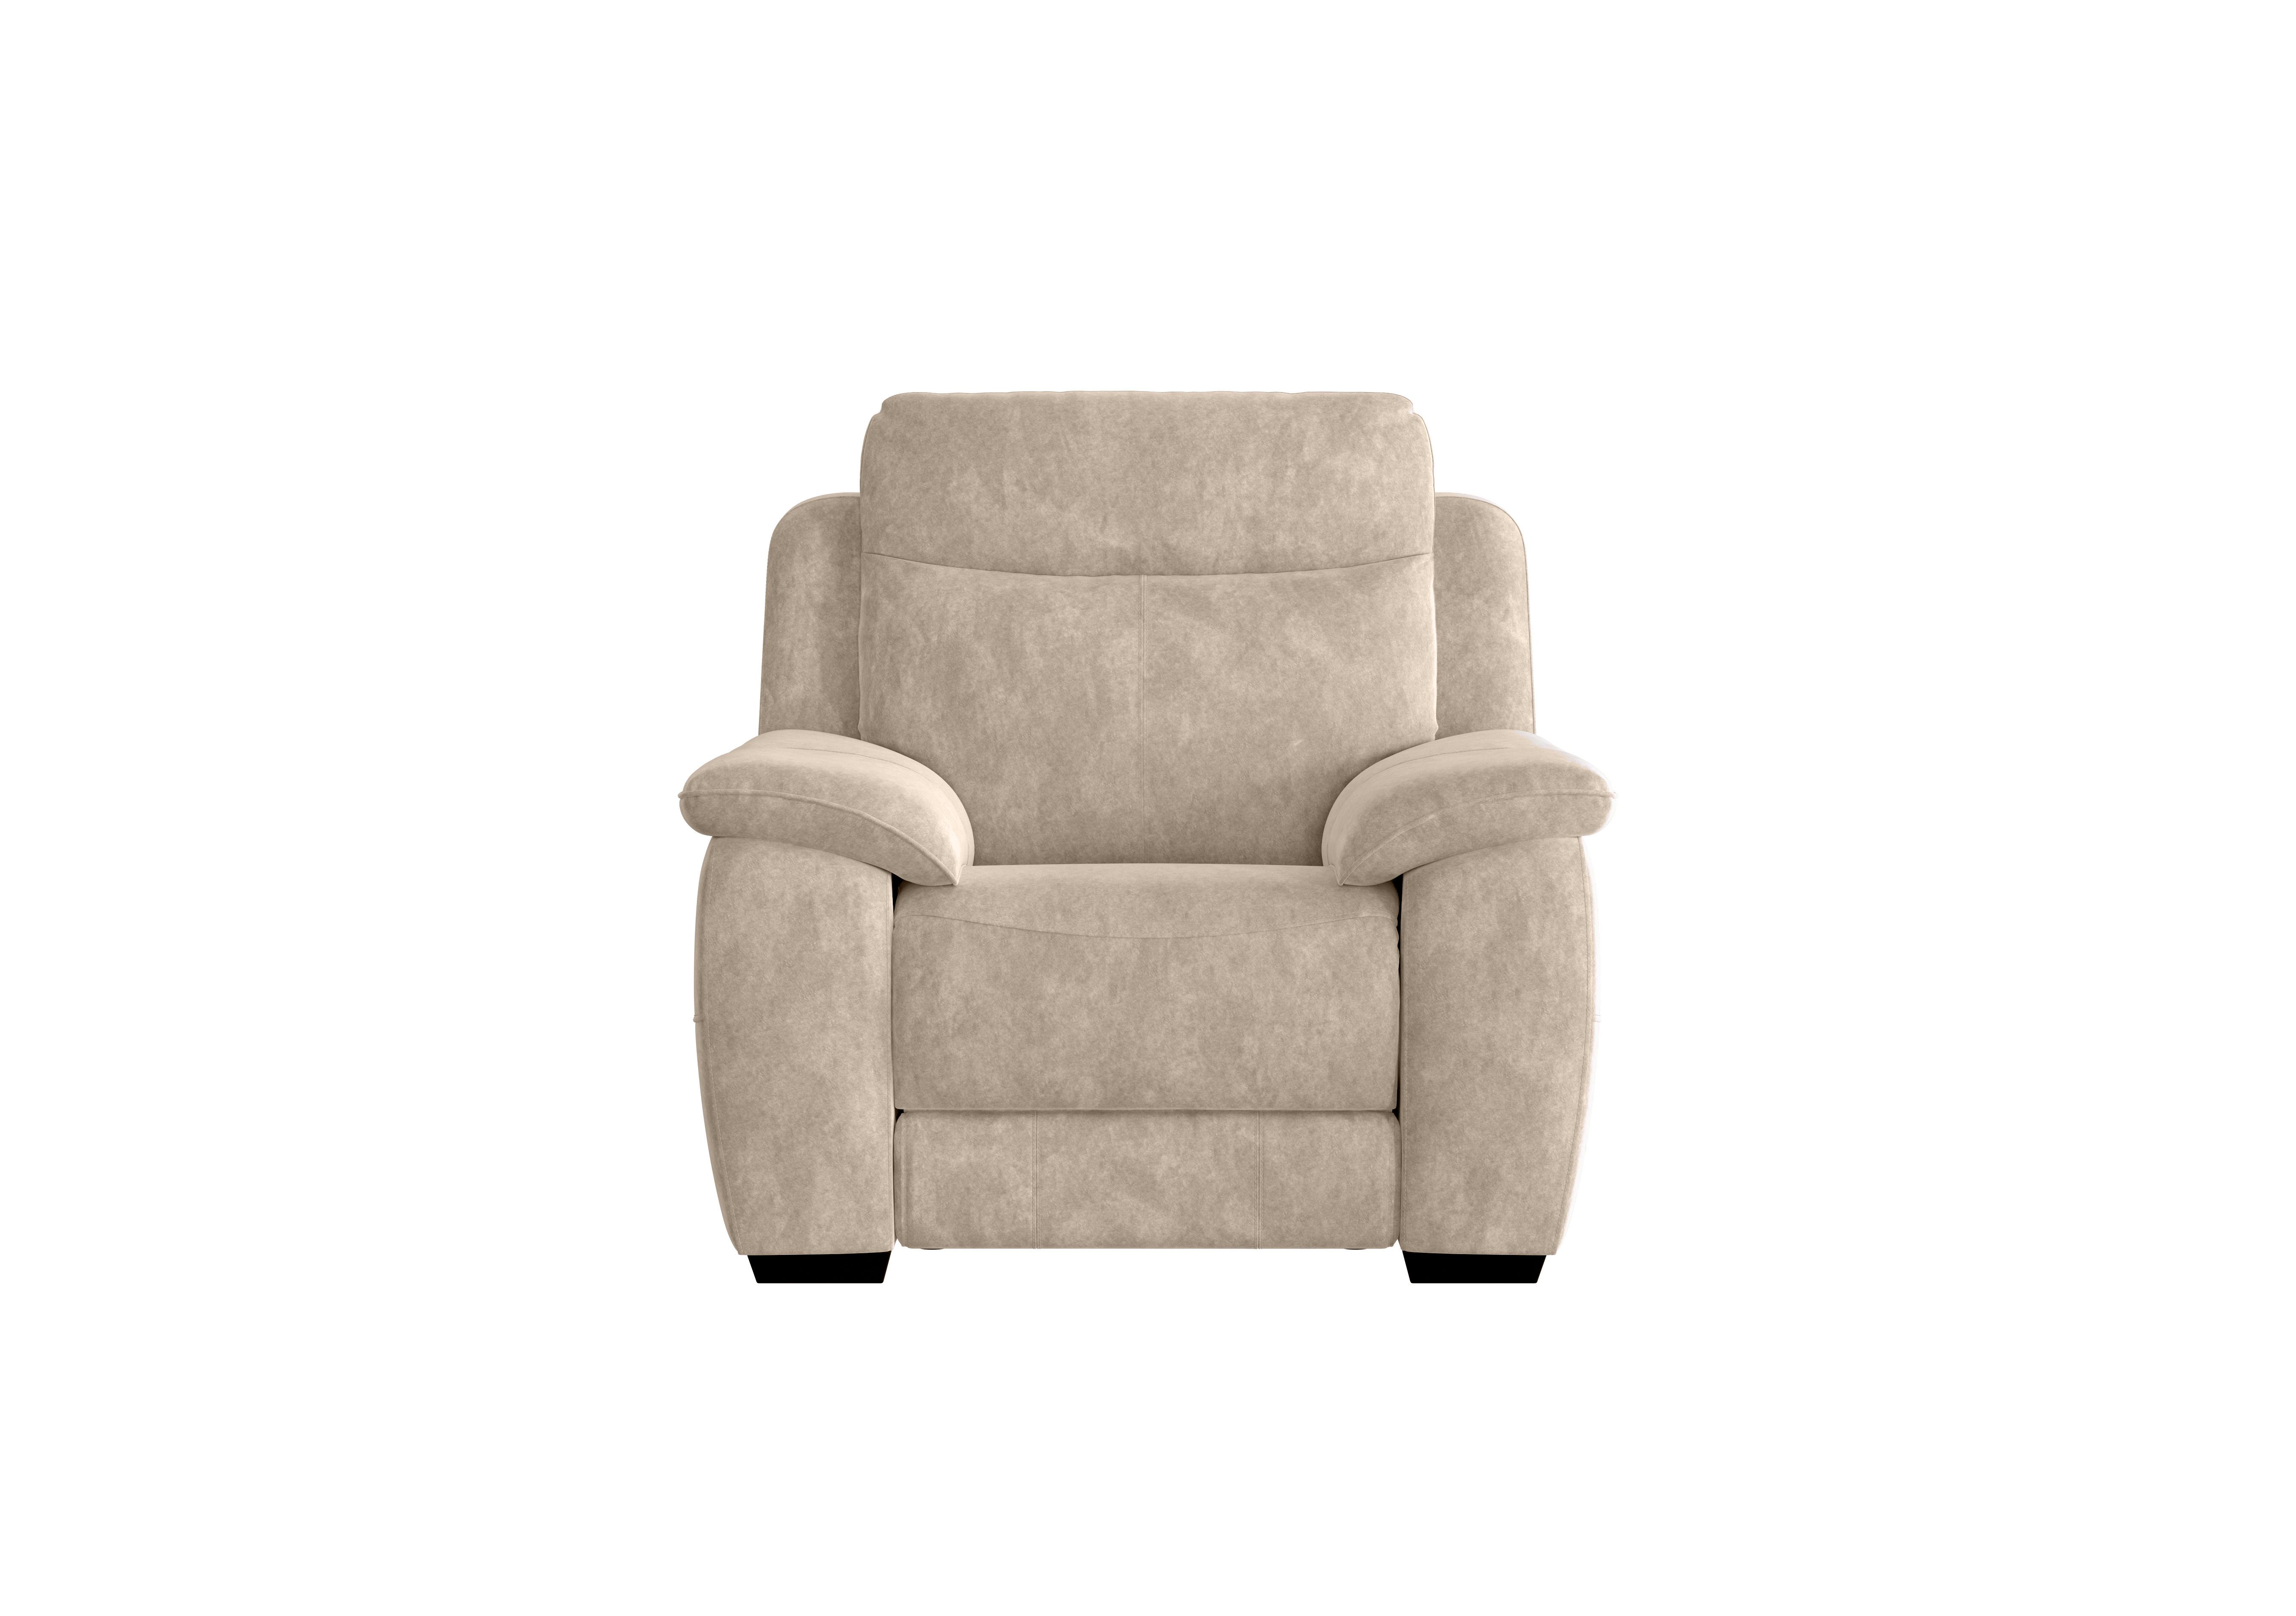 Starlight Express Fabric Armchair in Bfa-Bnn-R26 Fv2 Cream on Furniture Village